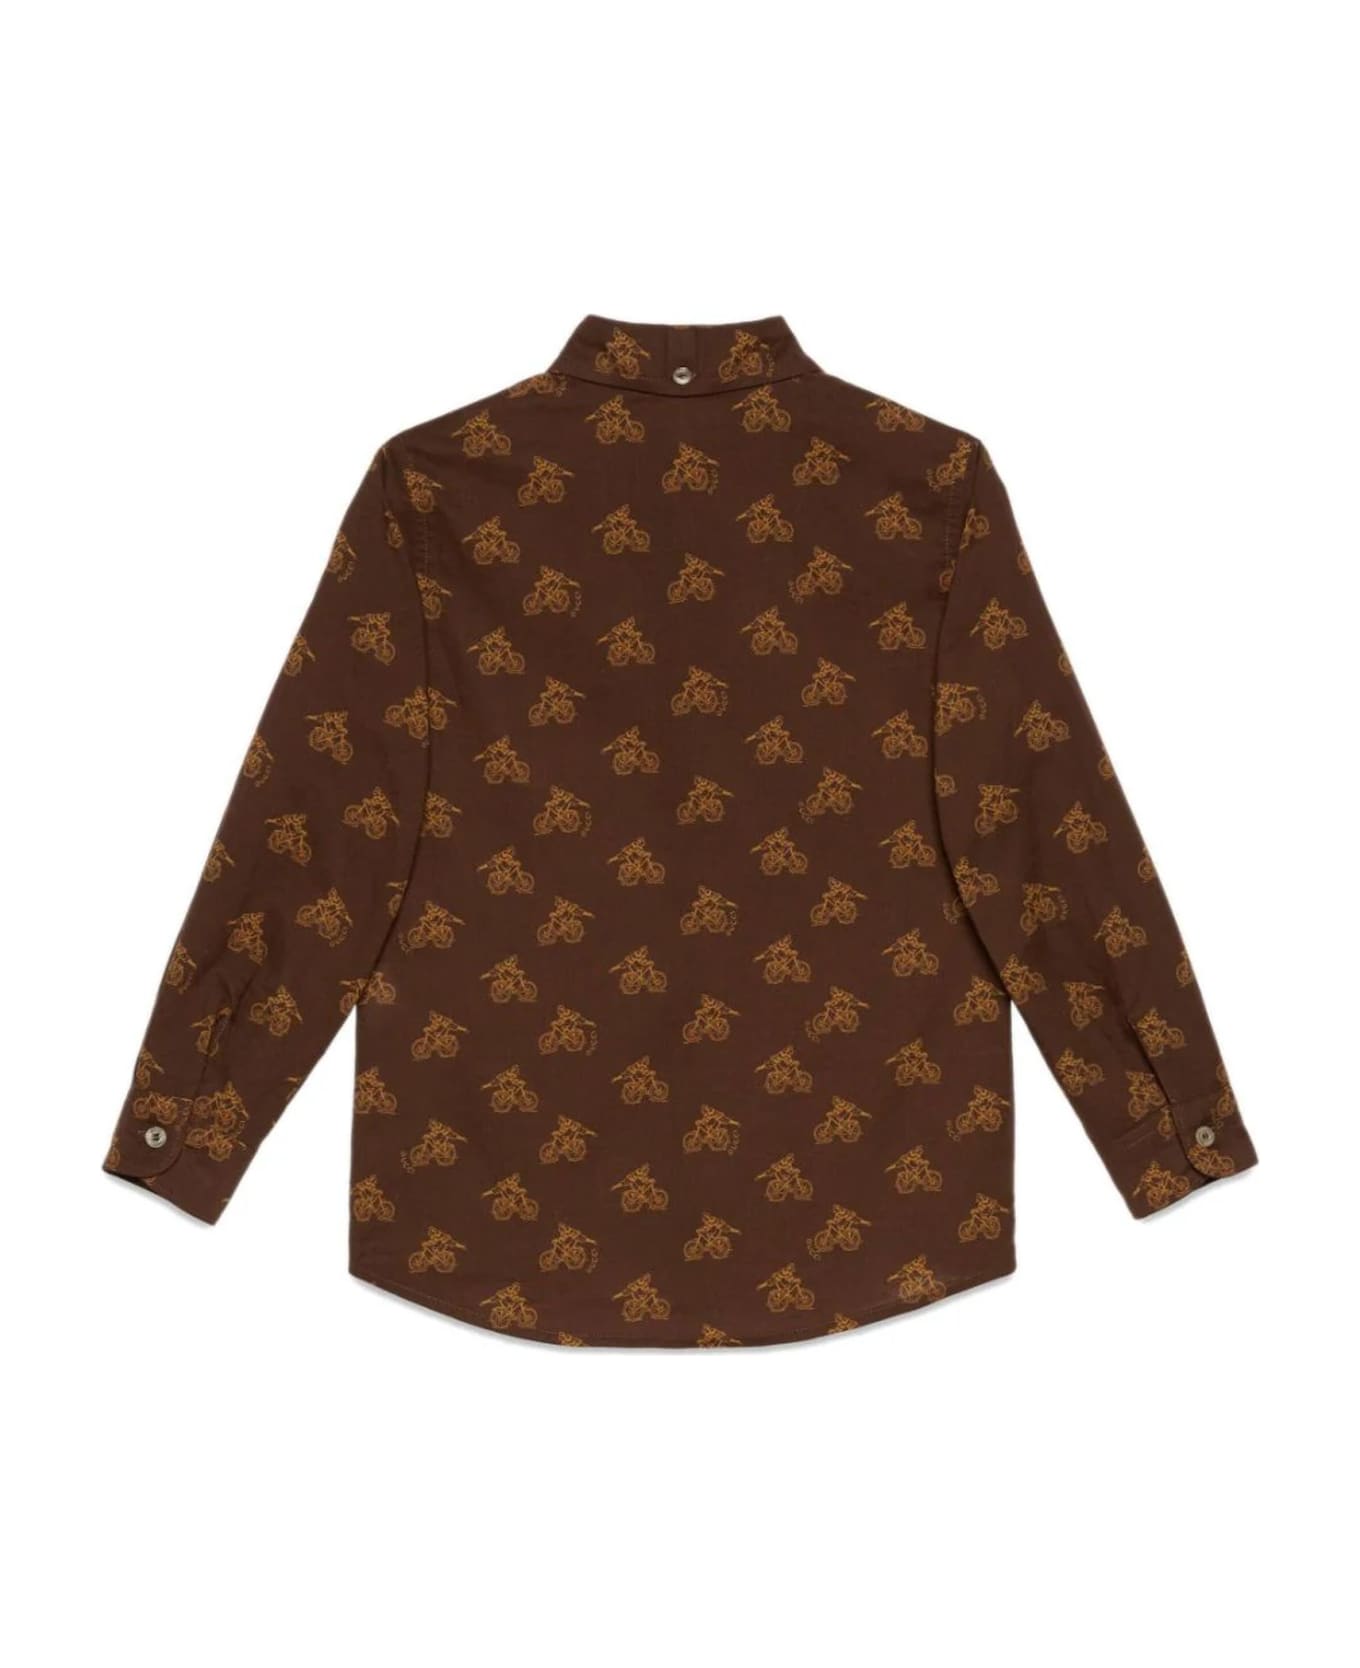 Gucci Chocolate Brown Cotton Shirt - BROWN